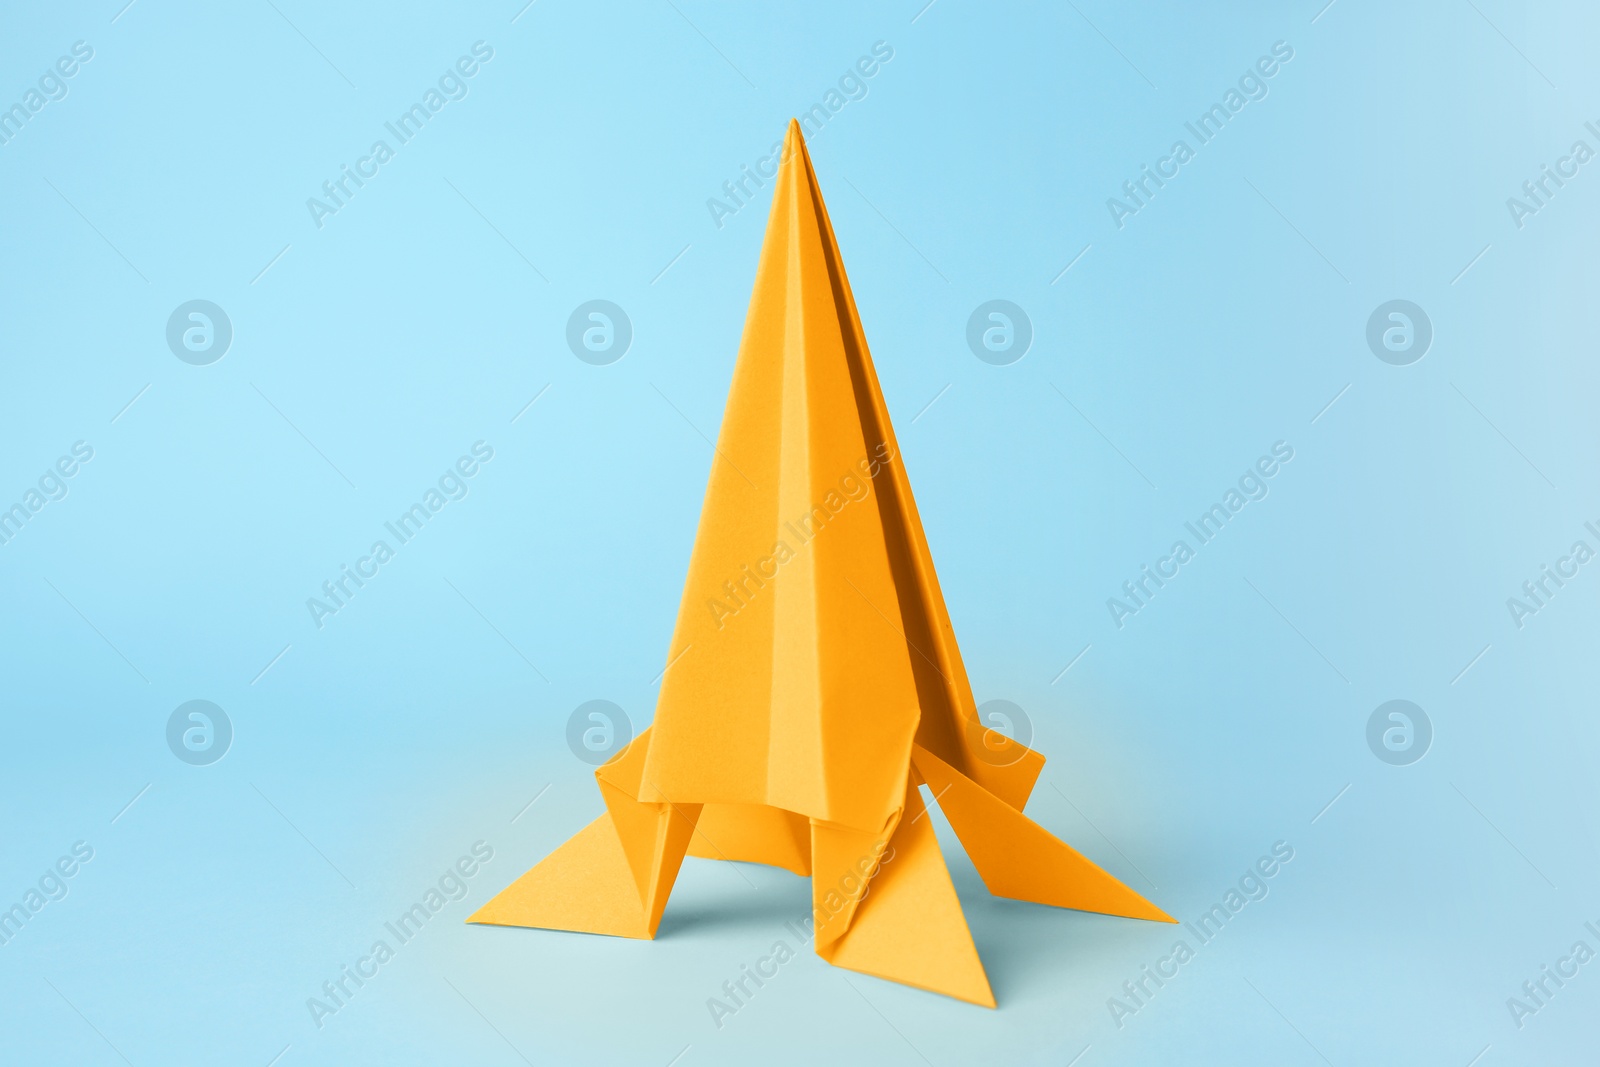 Photo of Origami art. Handmade yellow paper rocket on light blue background